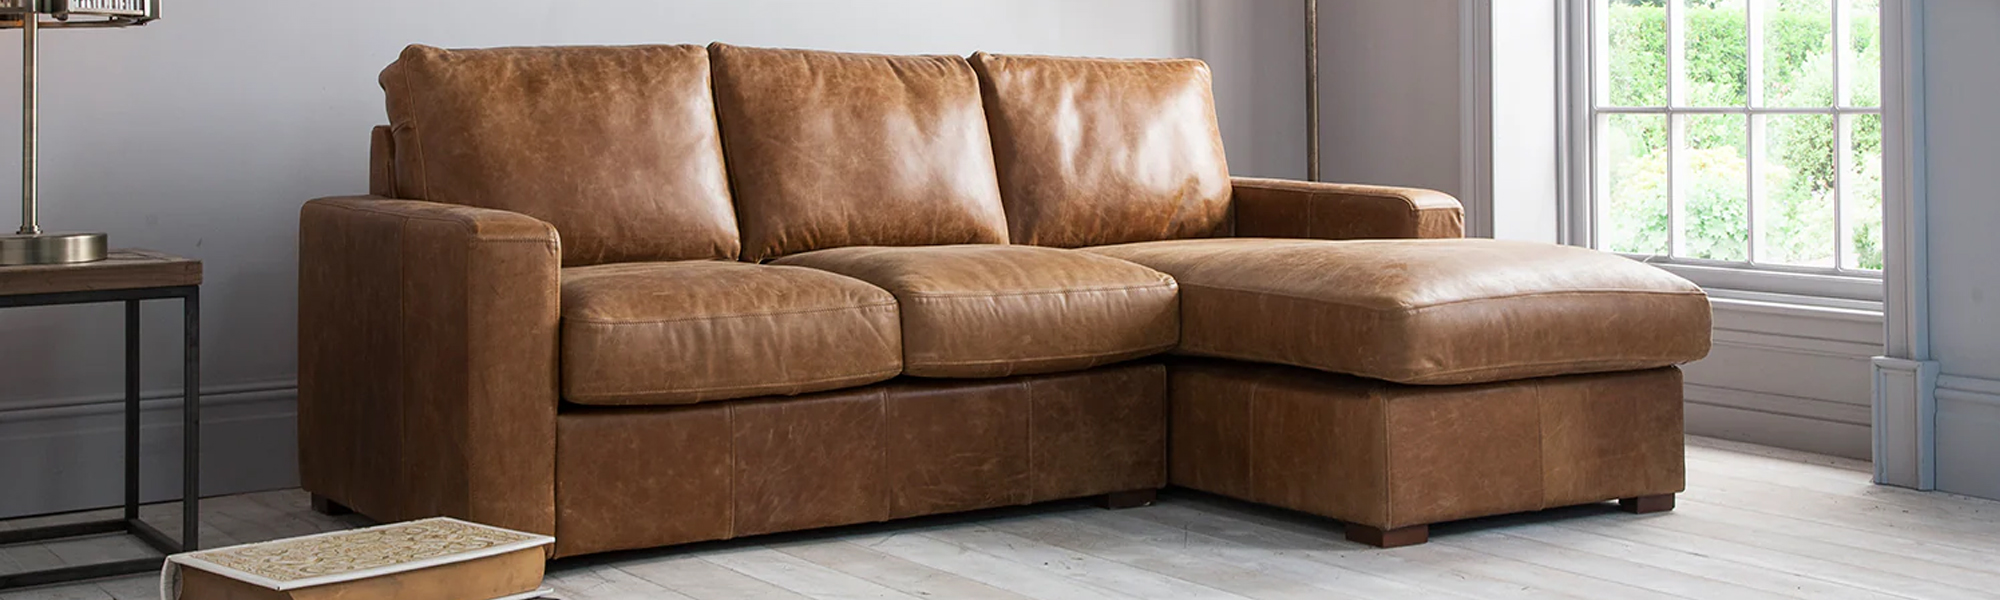 Modern Leather Corner Sofas